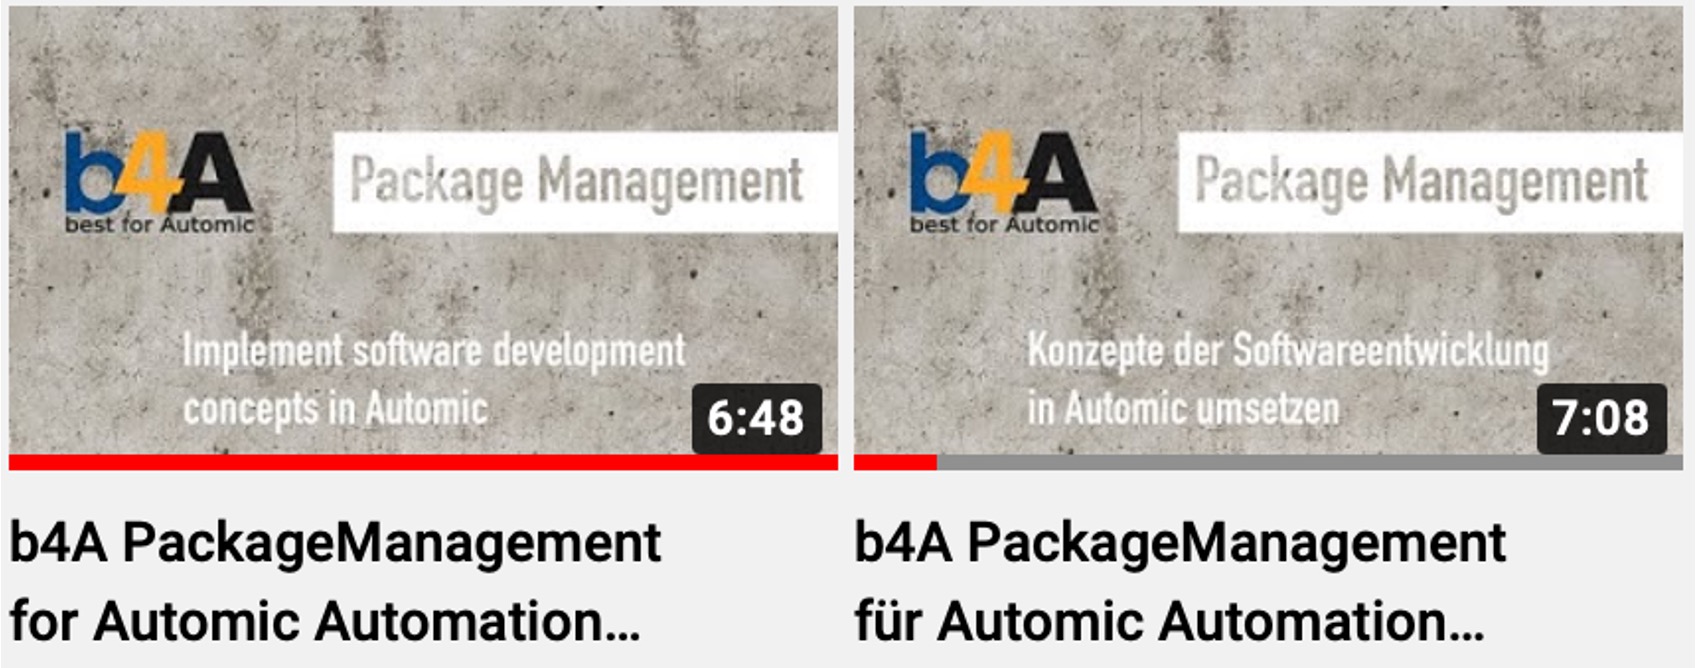 best4Automic, Packagemanagement, Automation, YouTube